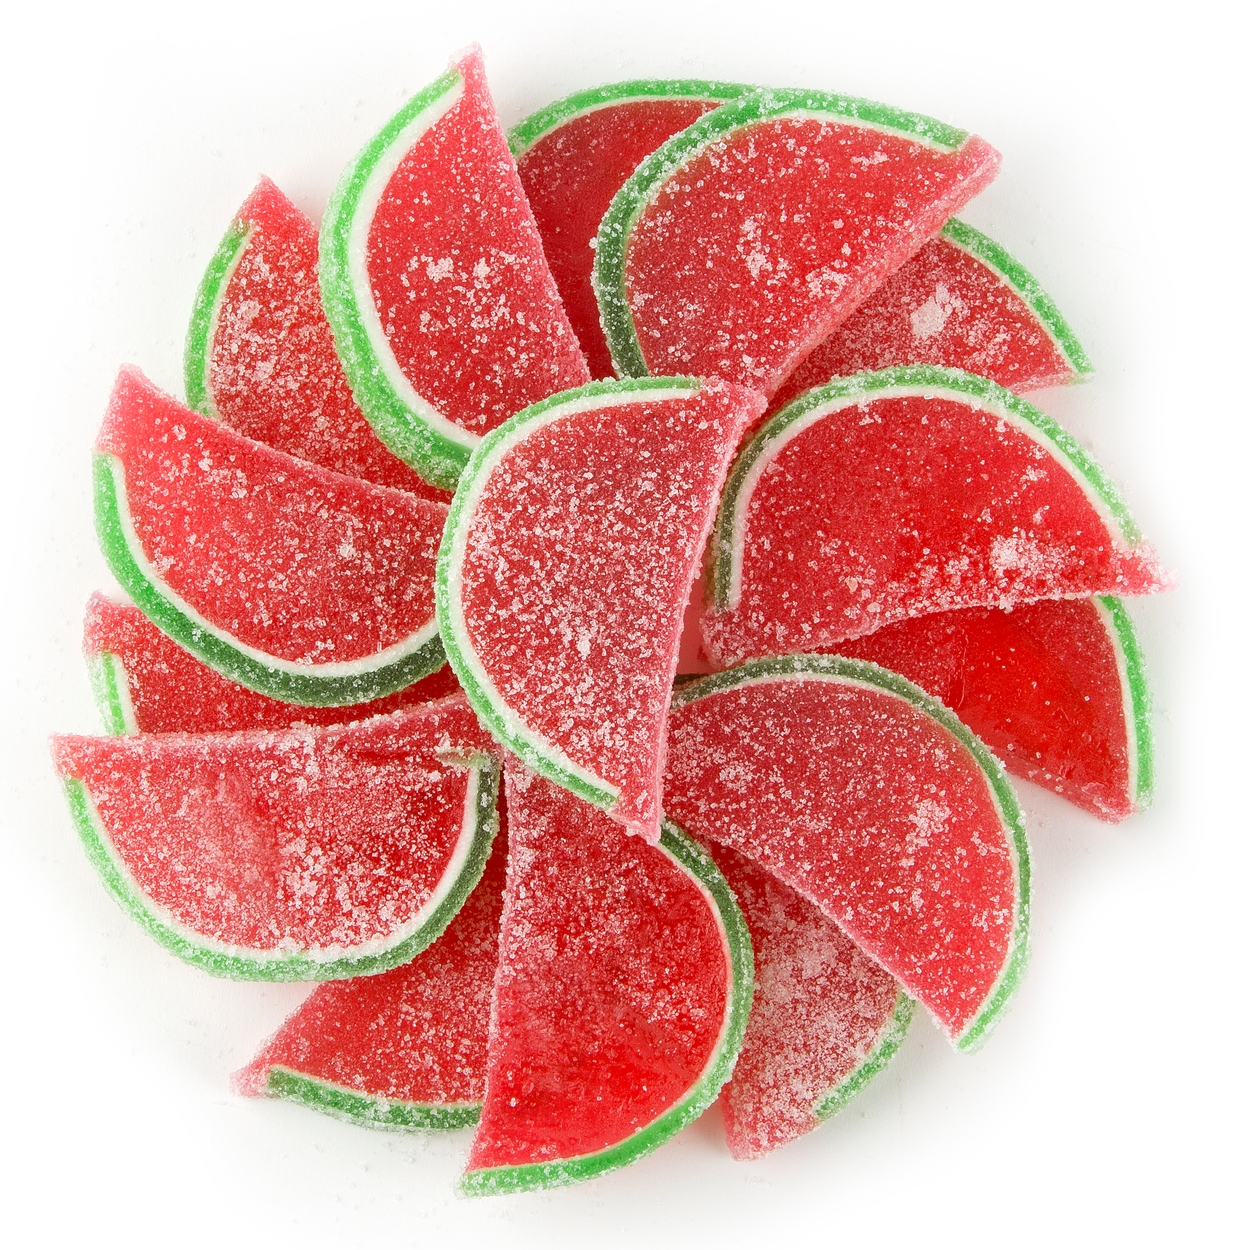 https://www.ohnuts.com/noapp/showImage.cfm/zoom/watermelon%20fruit%20slices1.jpg